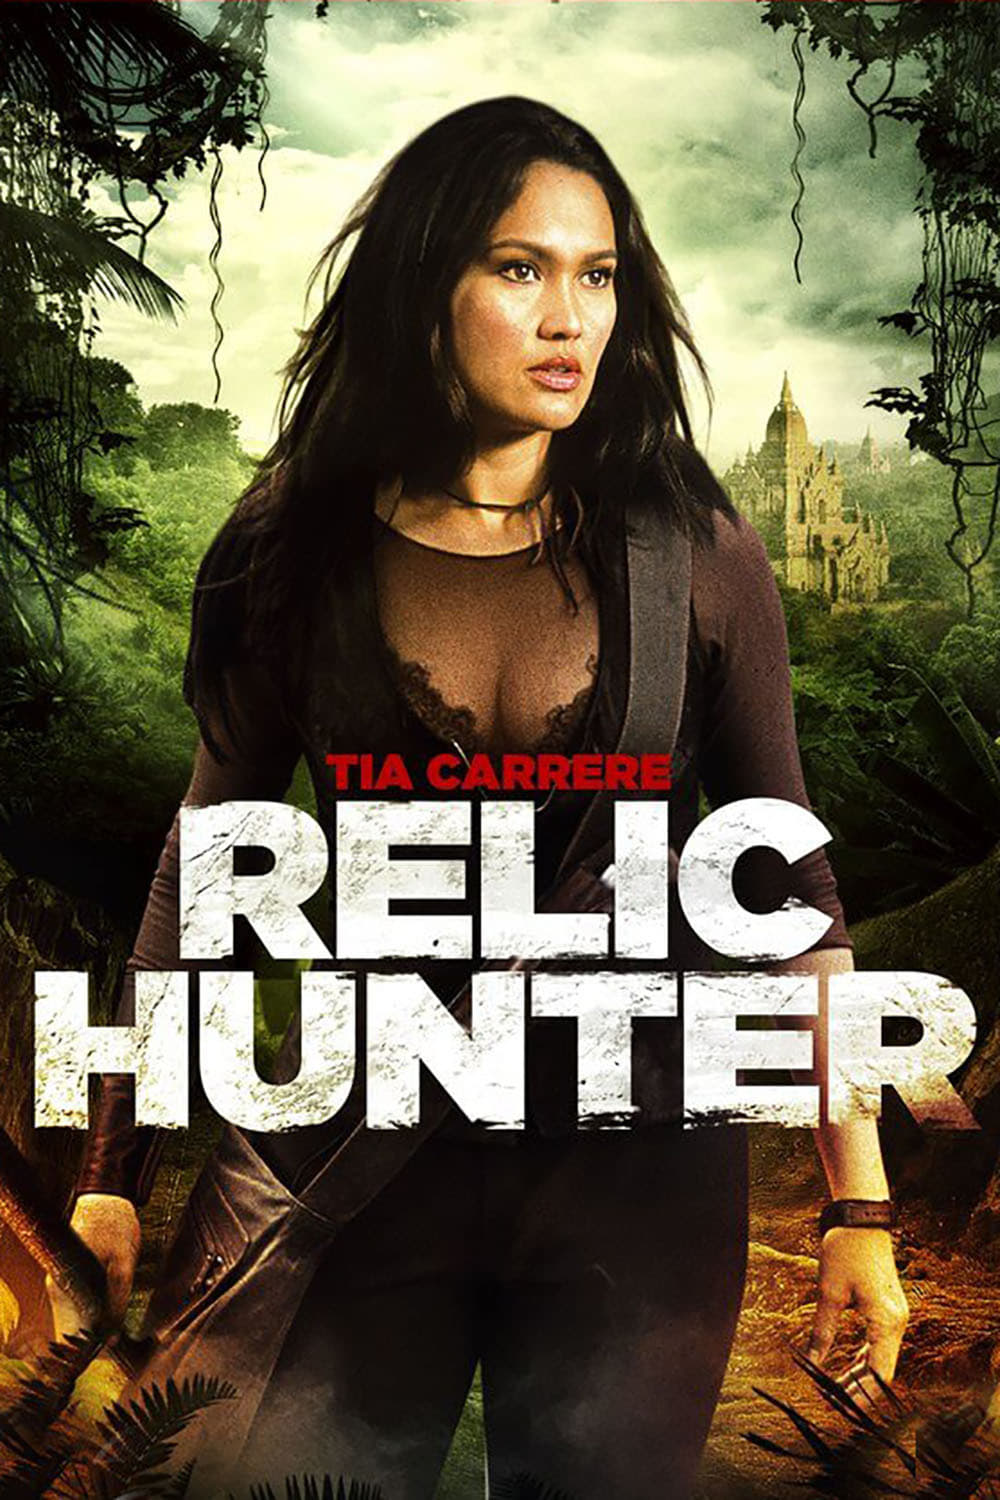 Relic Hunter (1999)